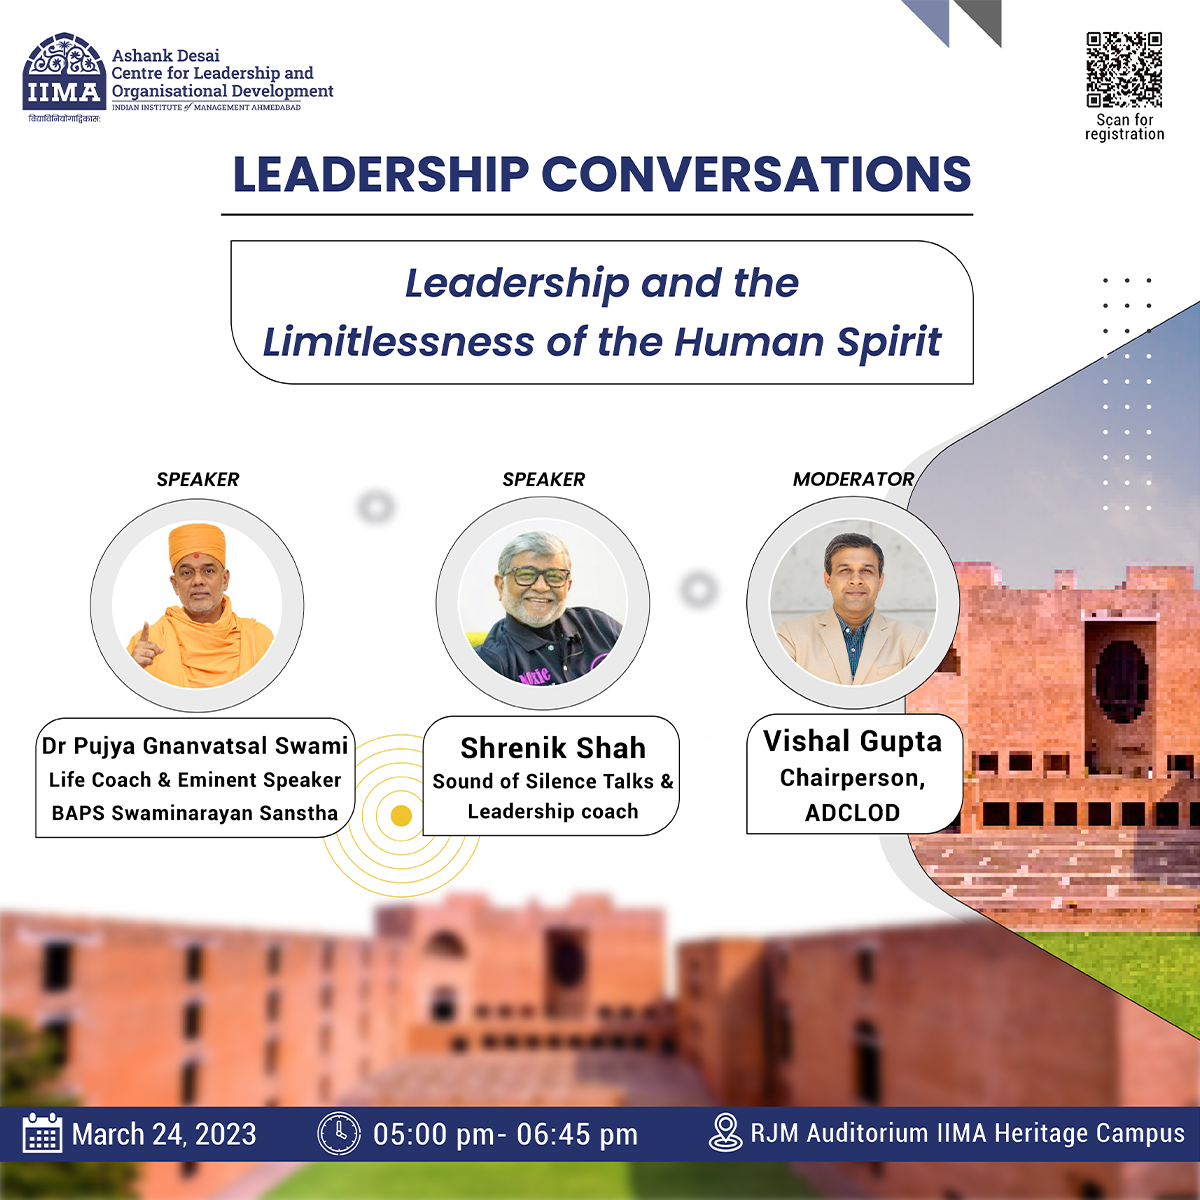 “Leadership Conversations: Leadership & the Limitlessness of the Human Spirit